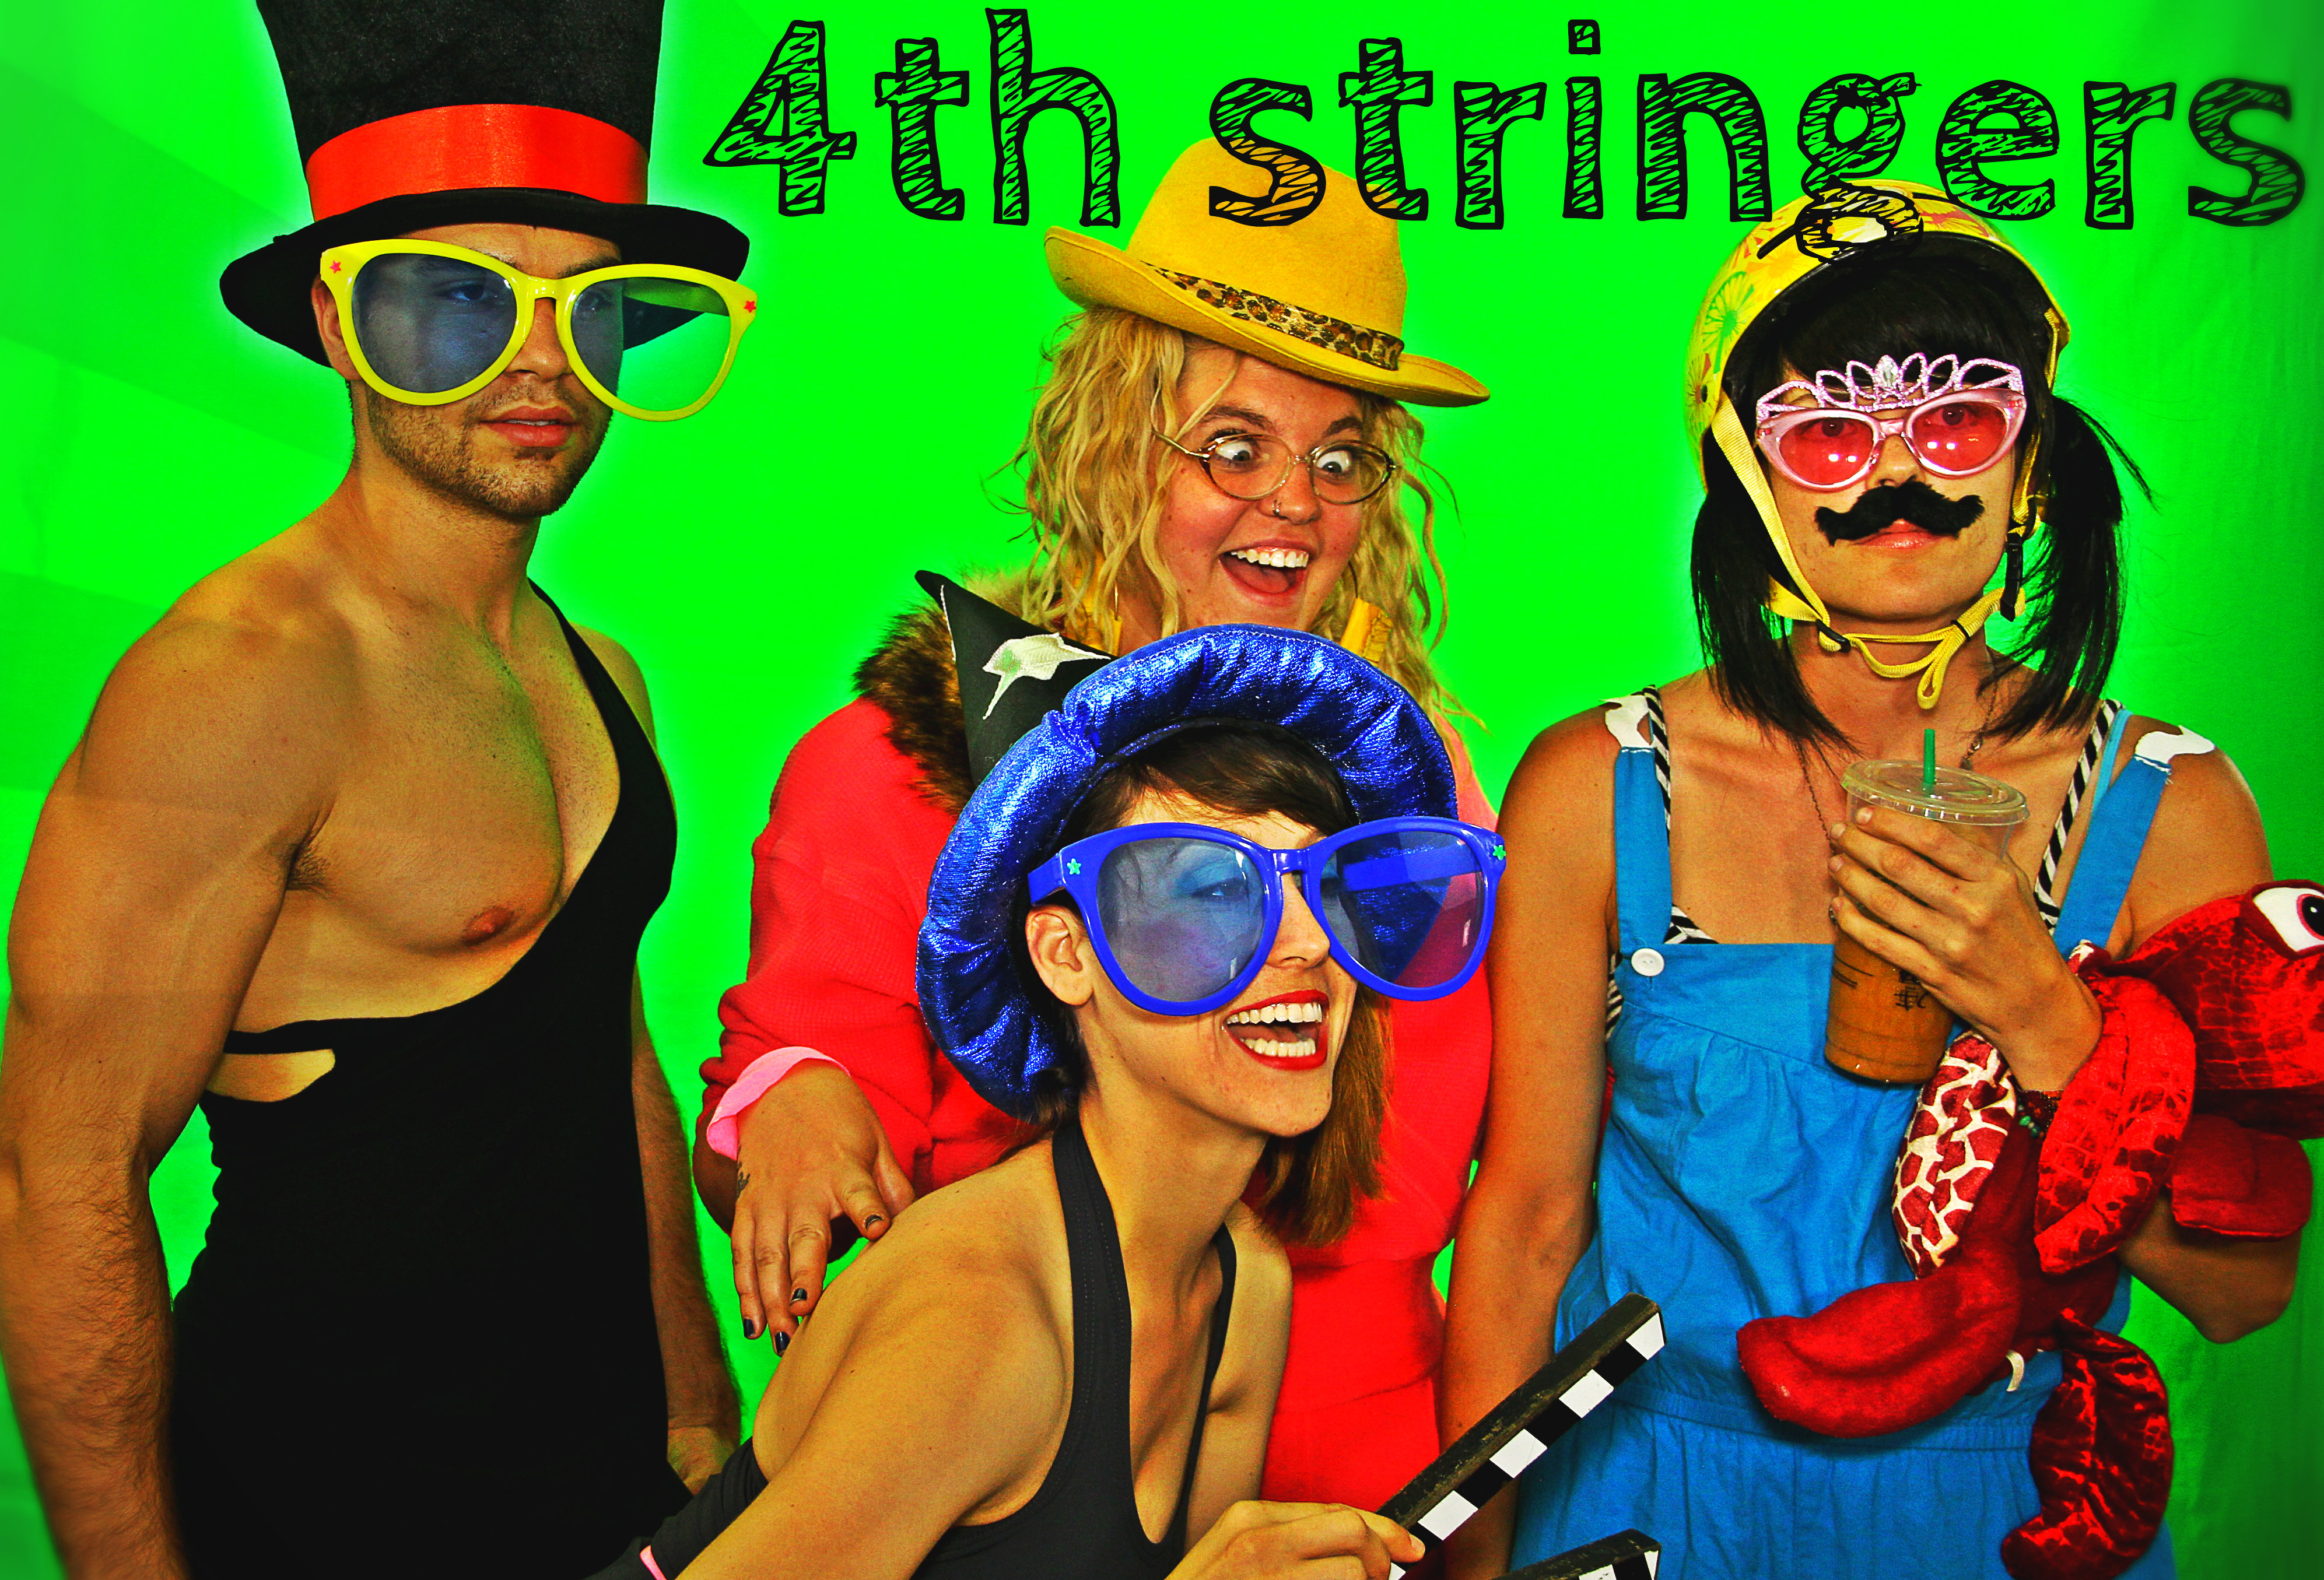 Fourth Stringers